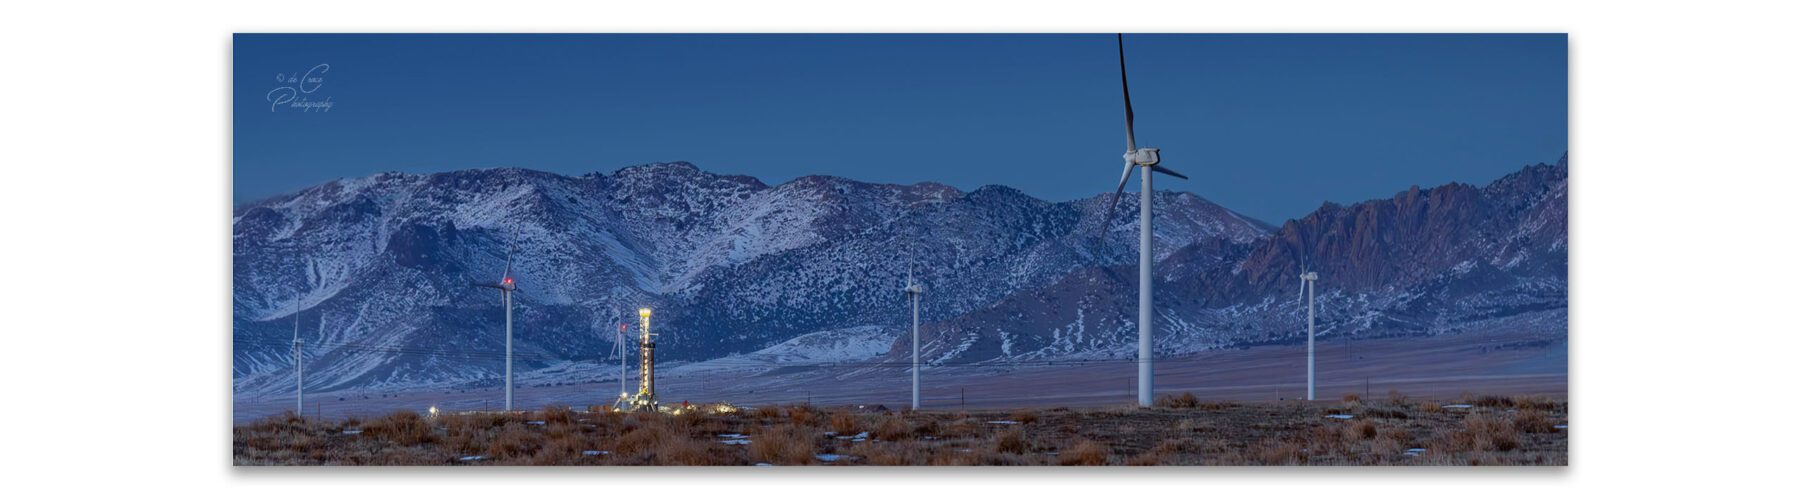 Alternative Energy Photo SW Utah